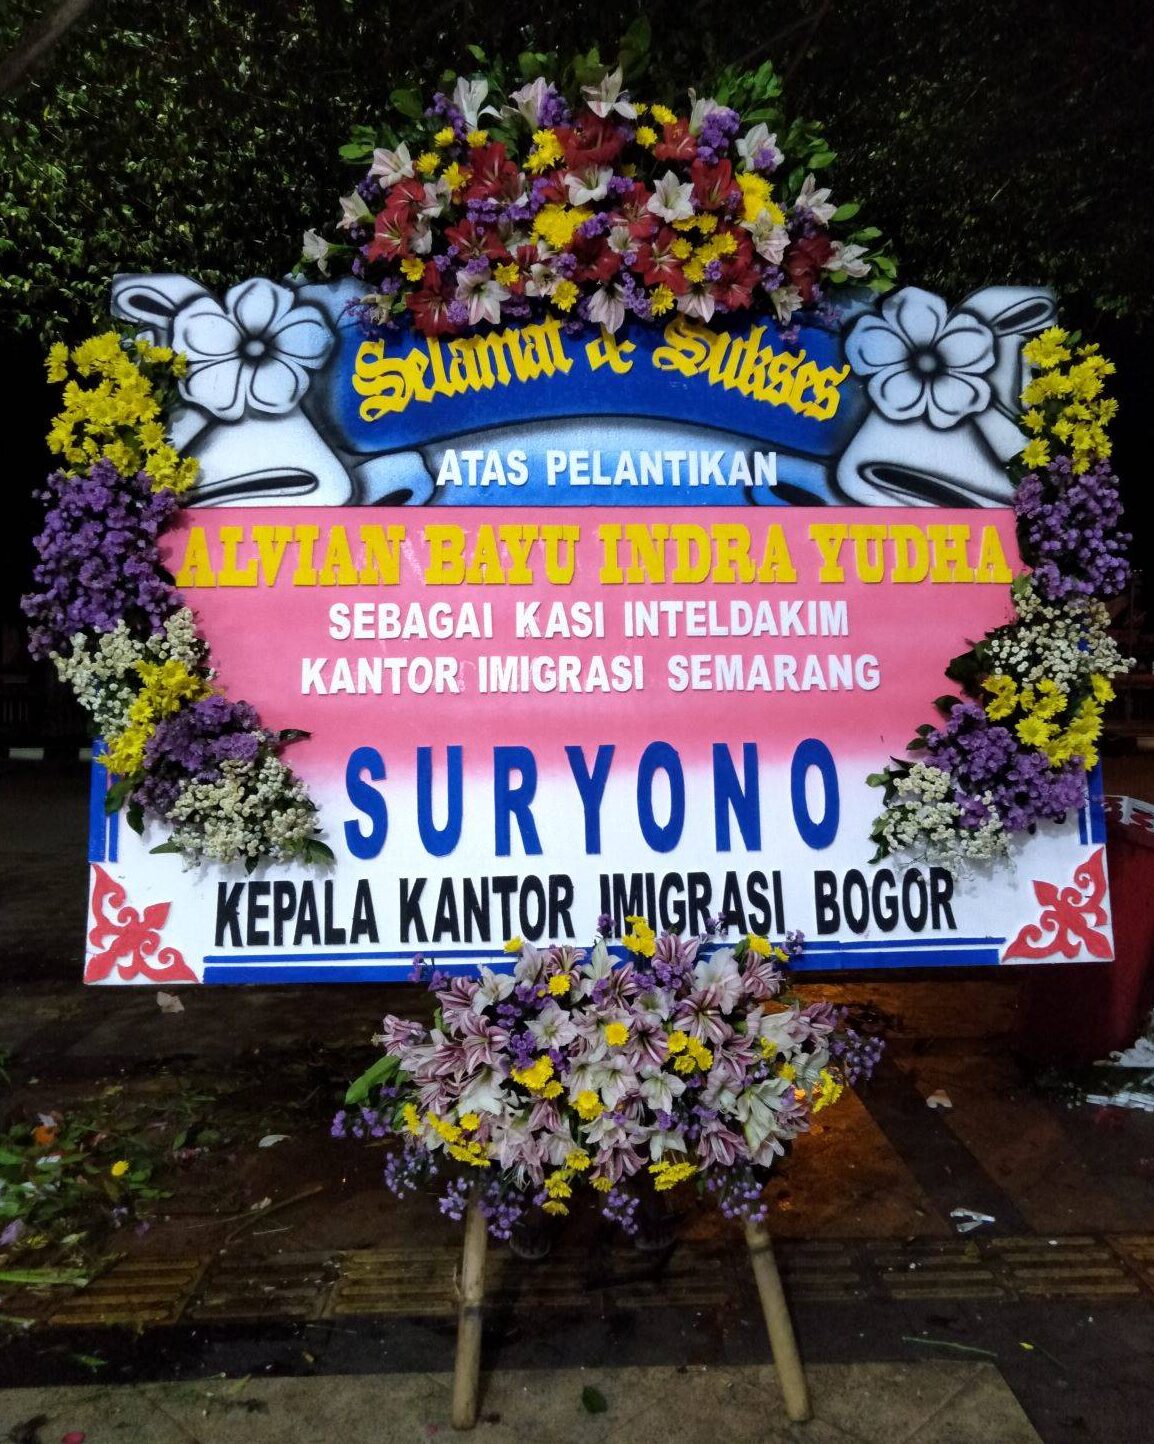 Toko Bunga Gajahmungkur Semarang